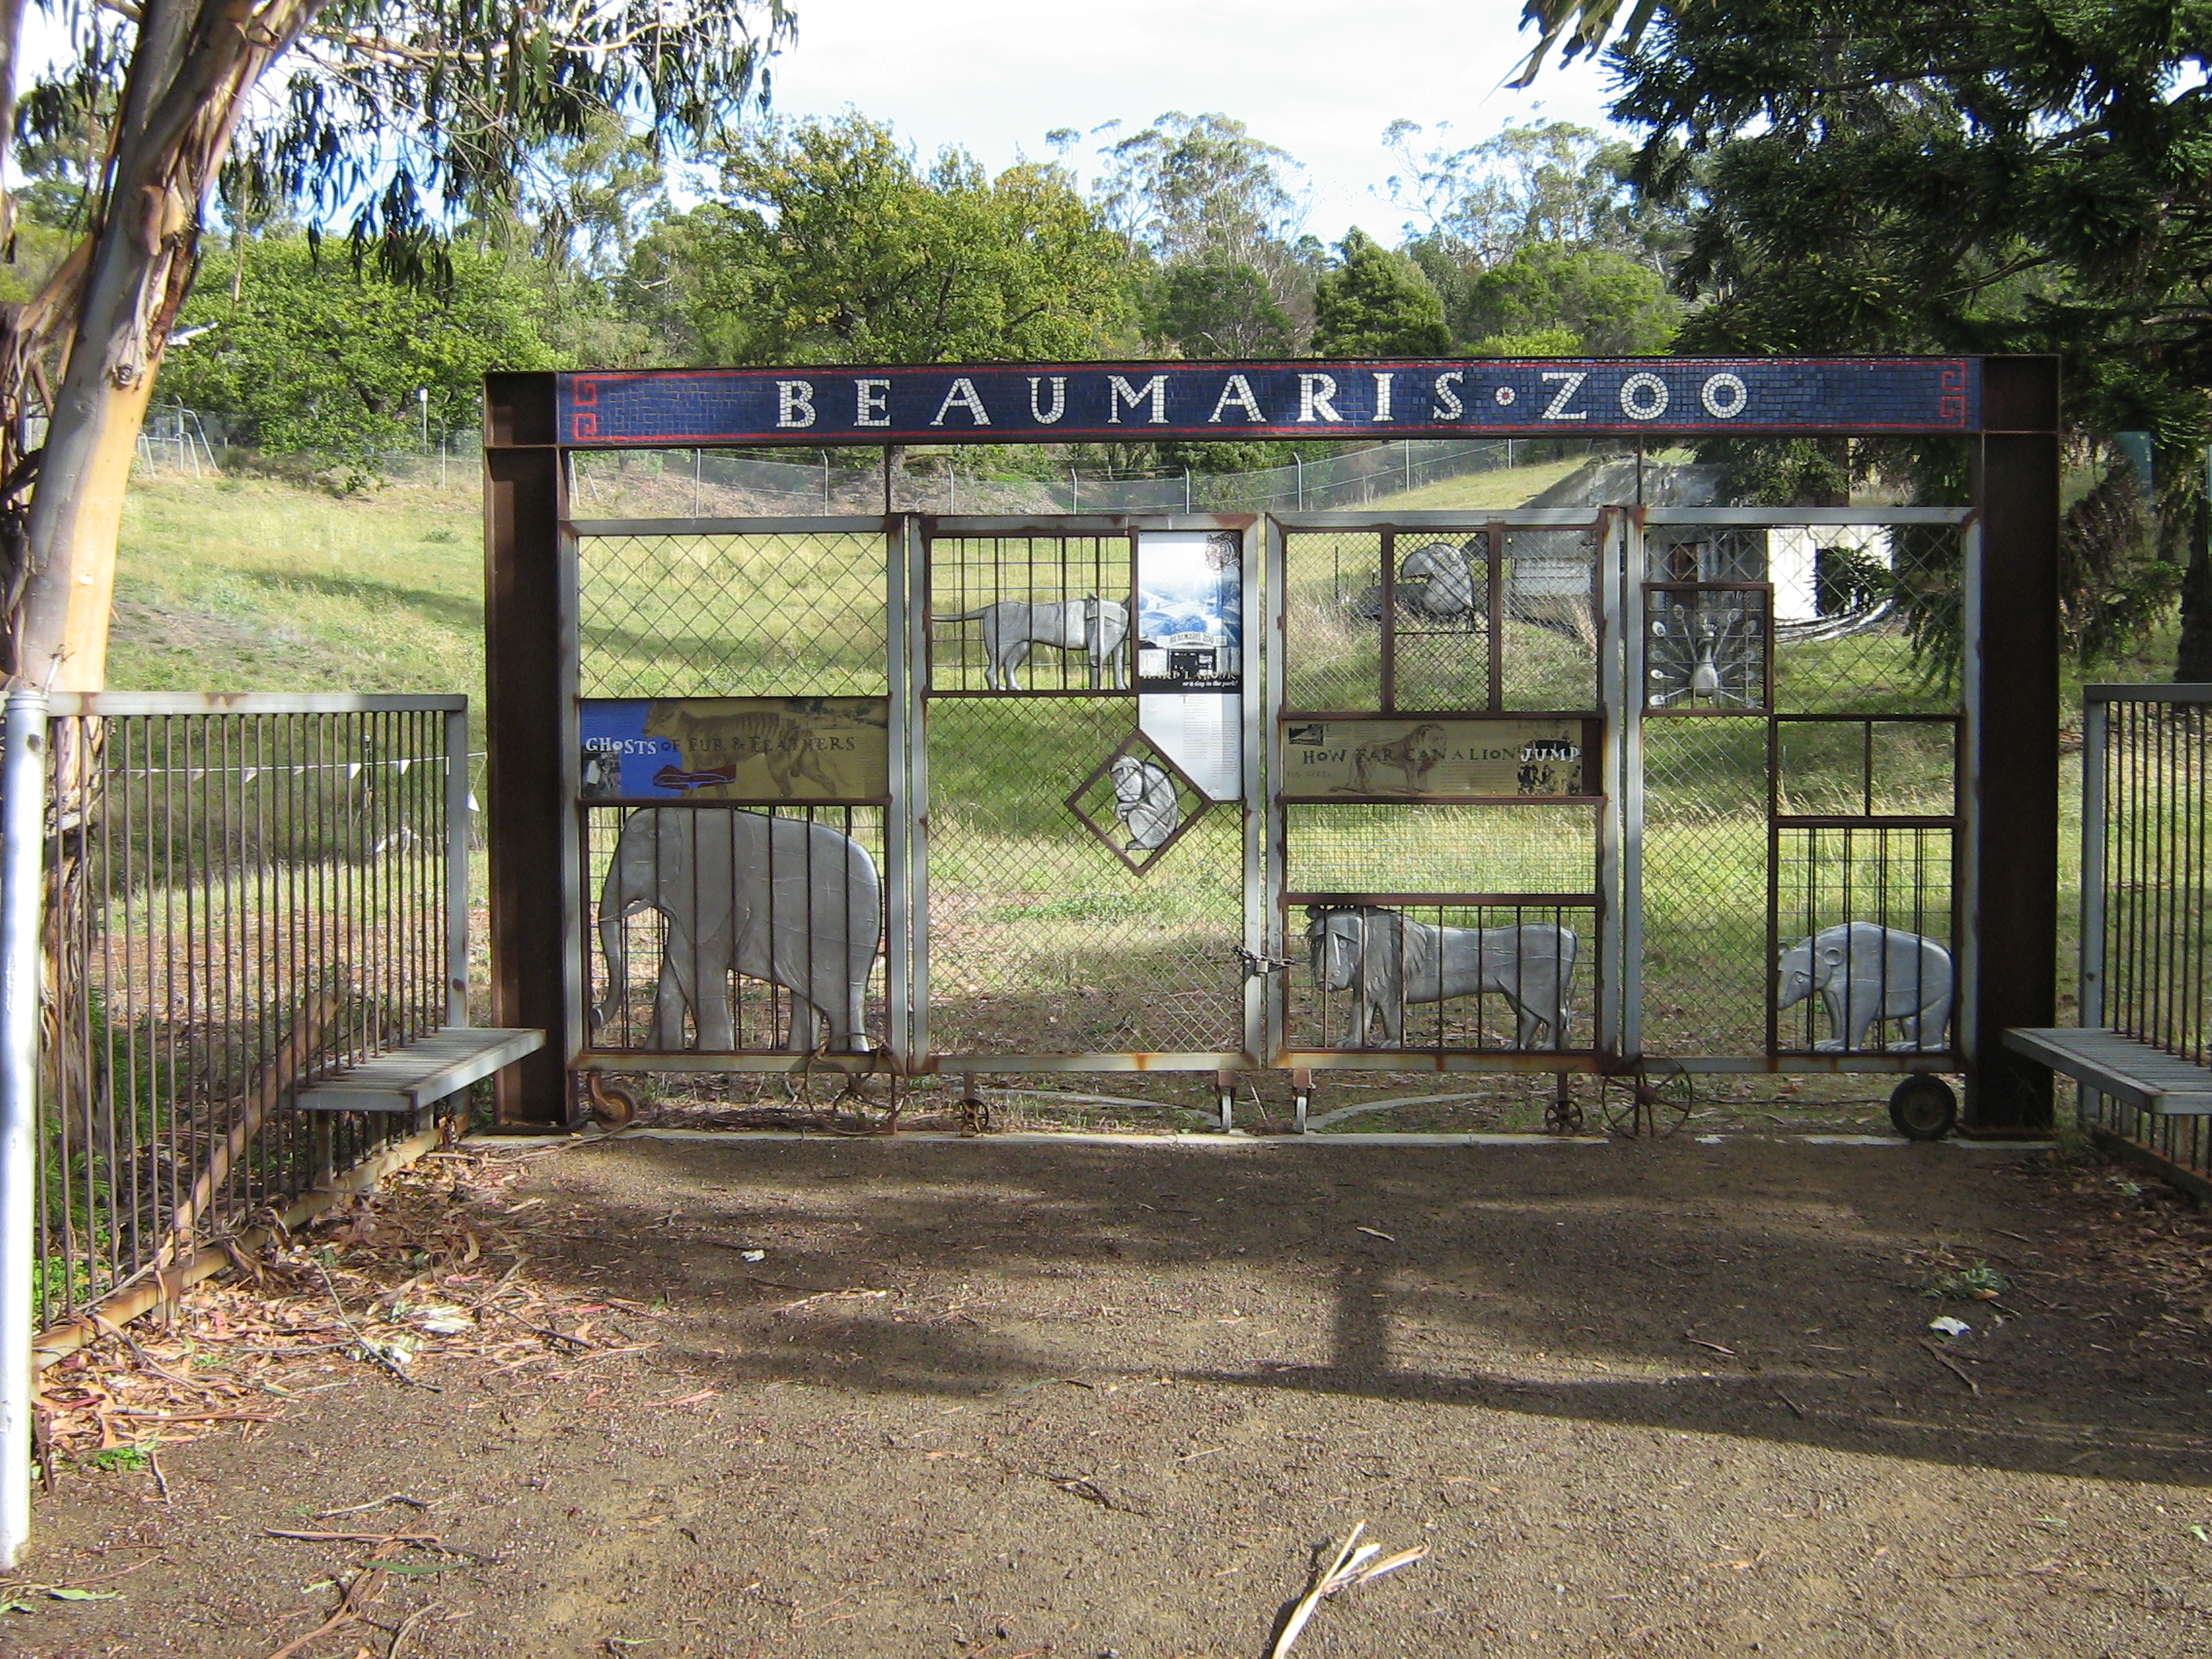 Beaumaris_Zoo_site.jpg